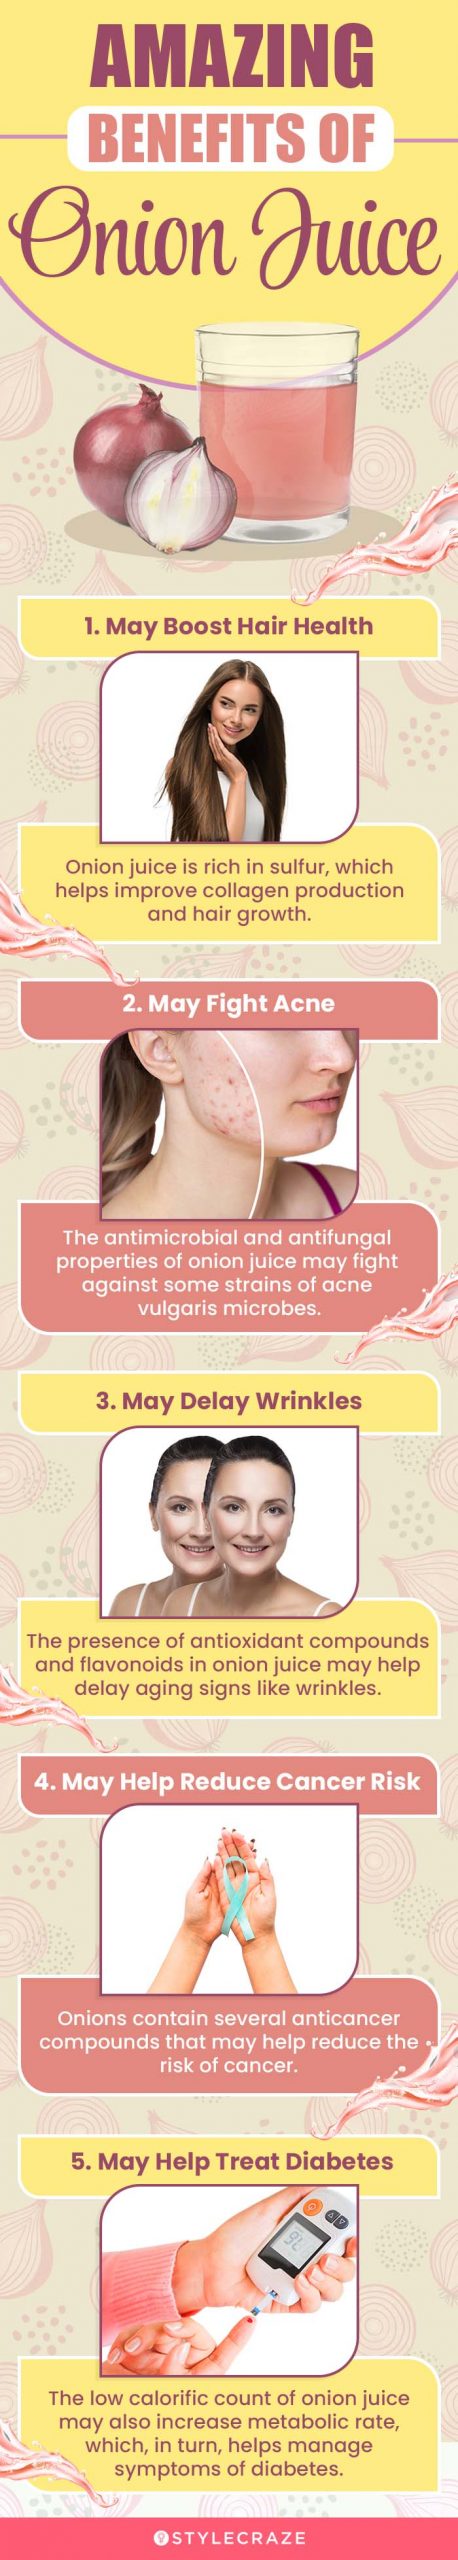 amazing benefits of onion juice [infographic]